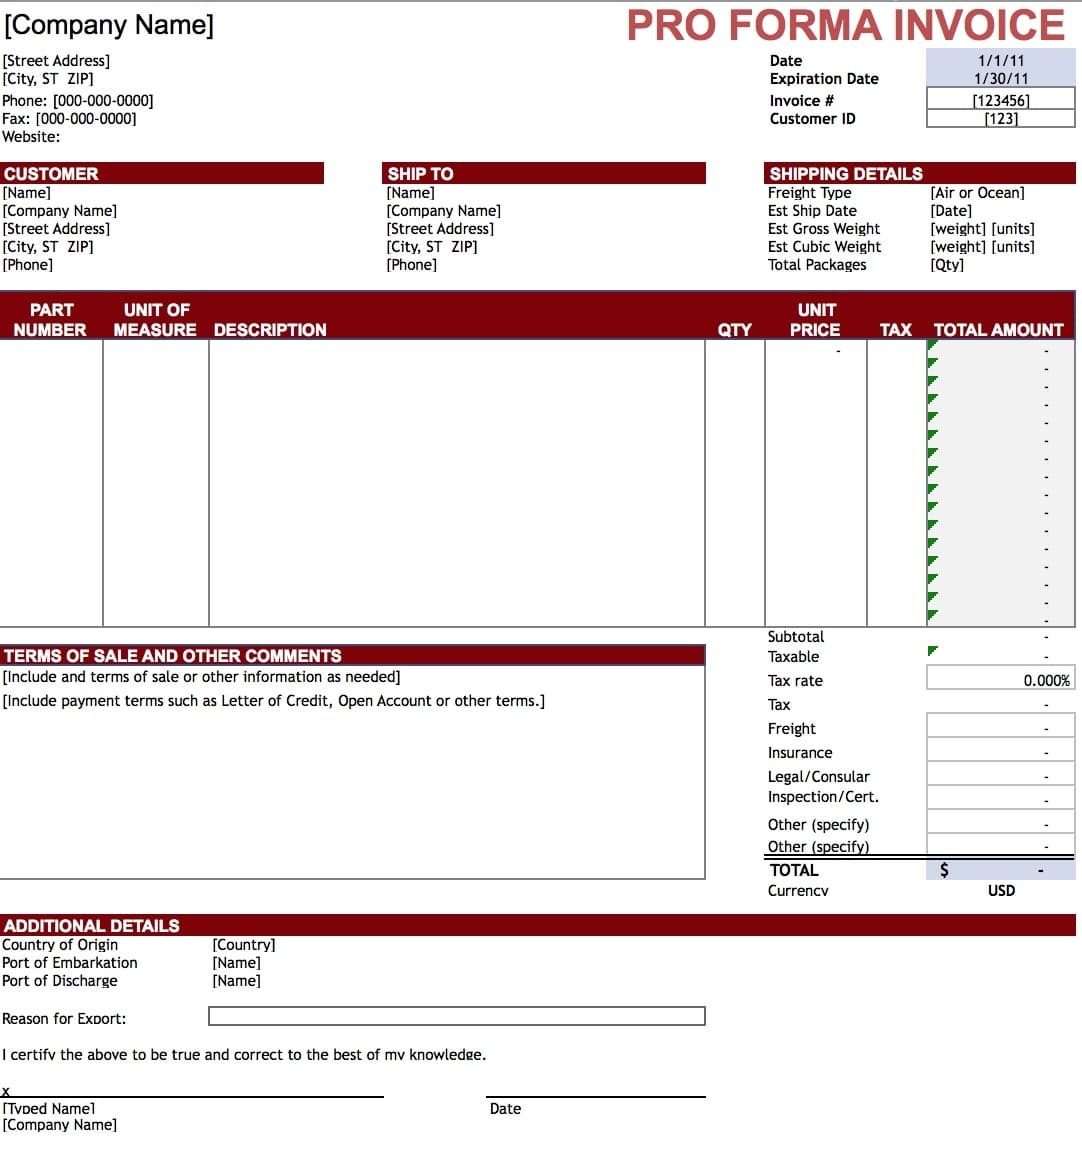 free pro forma invoice template excel pdf word doc proforma invoice samples